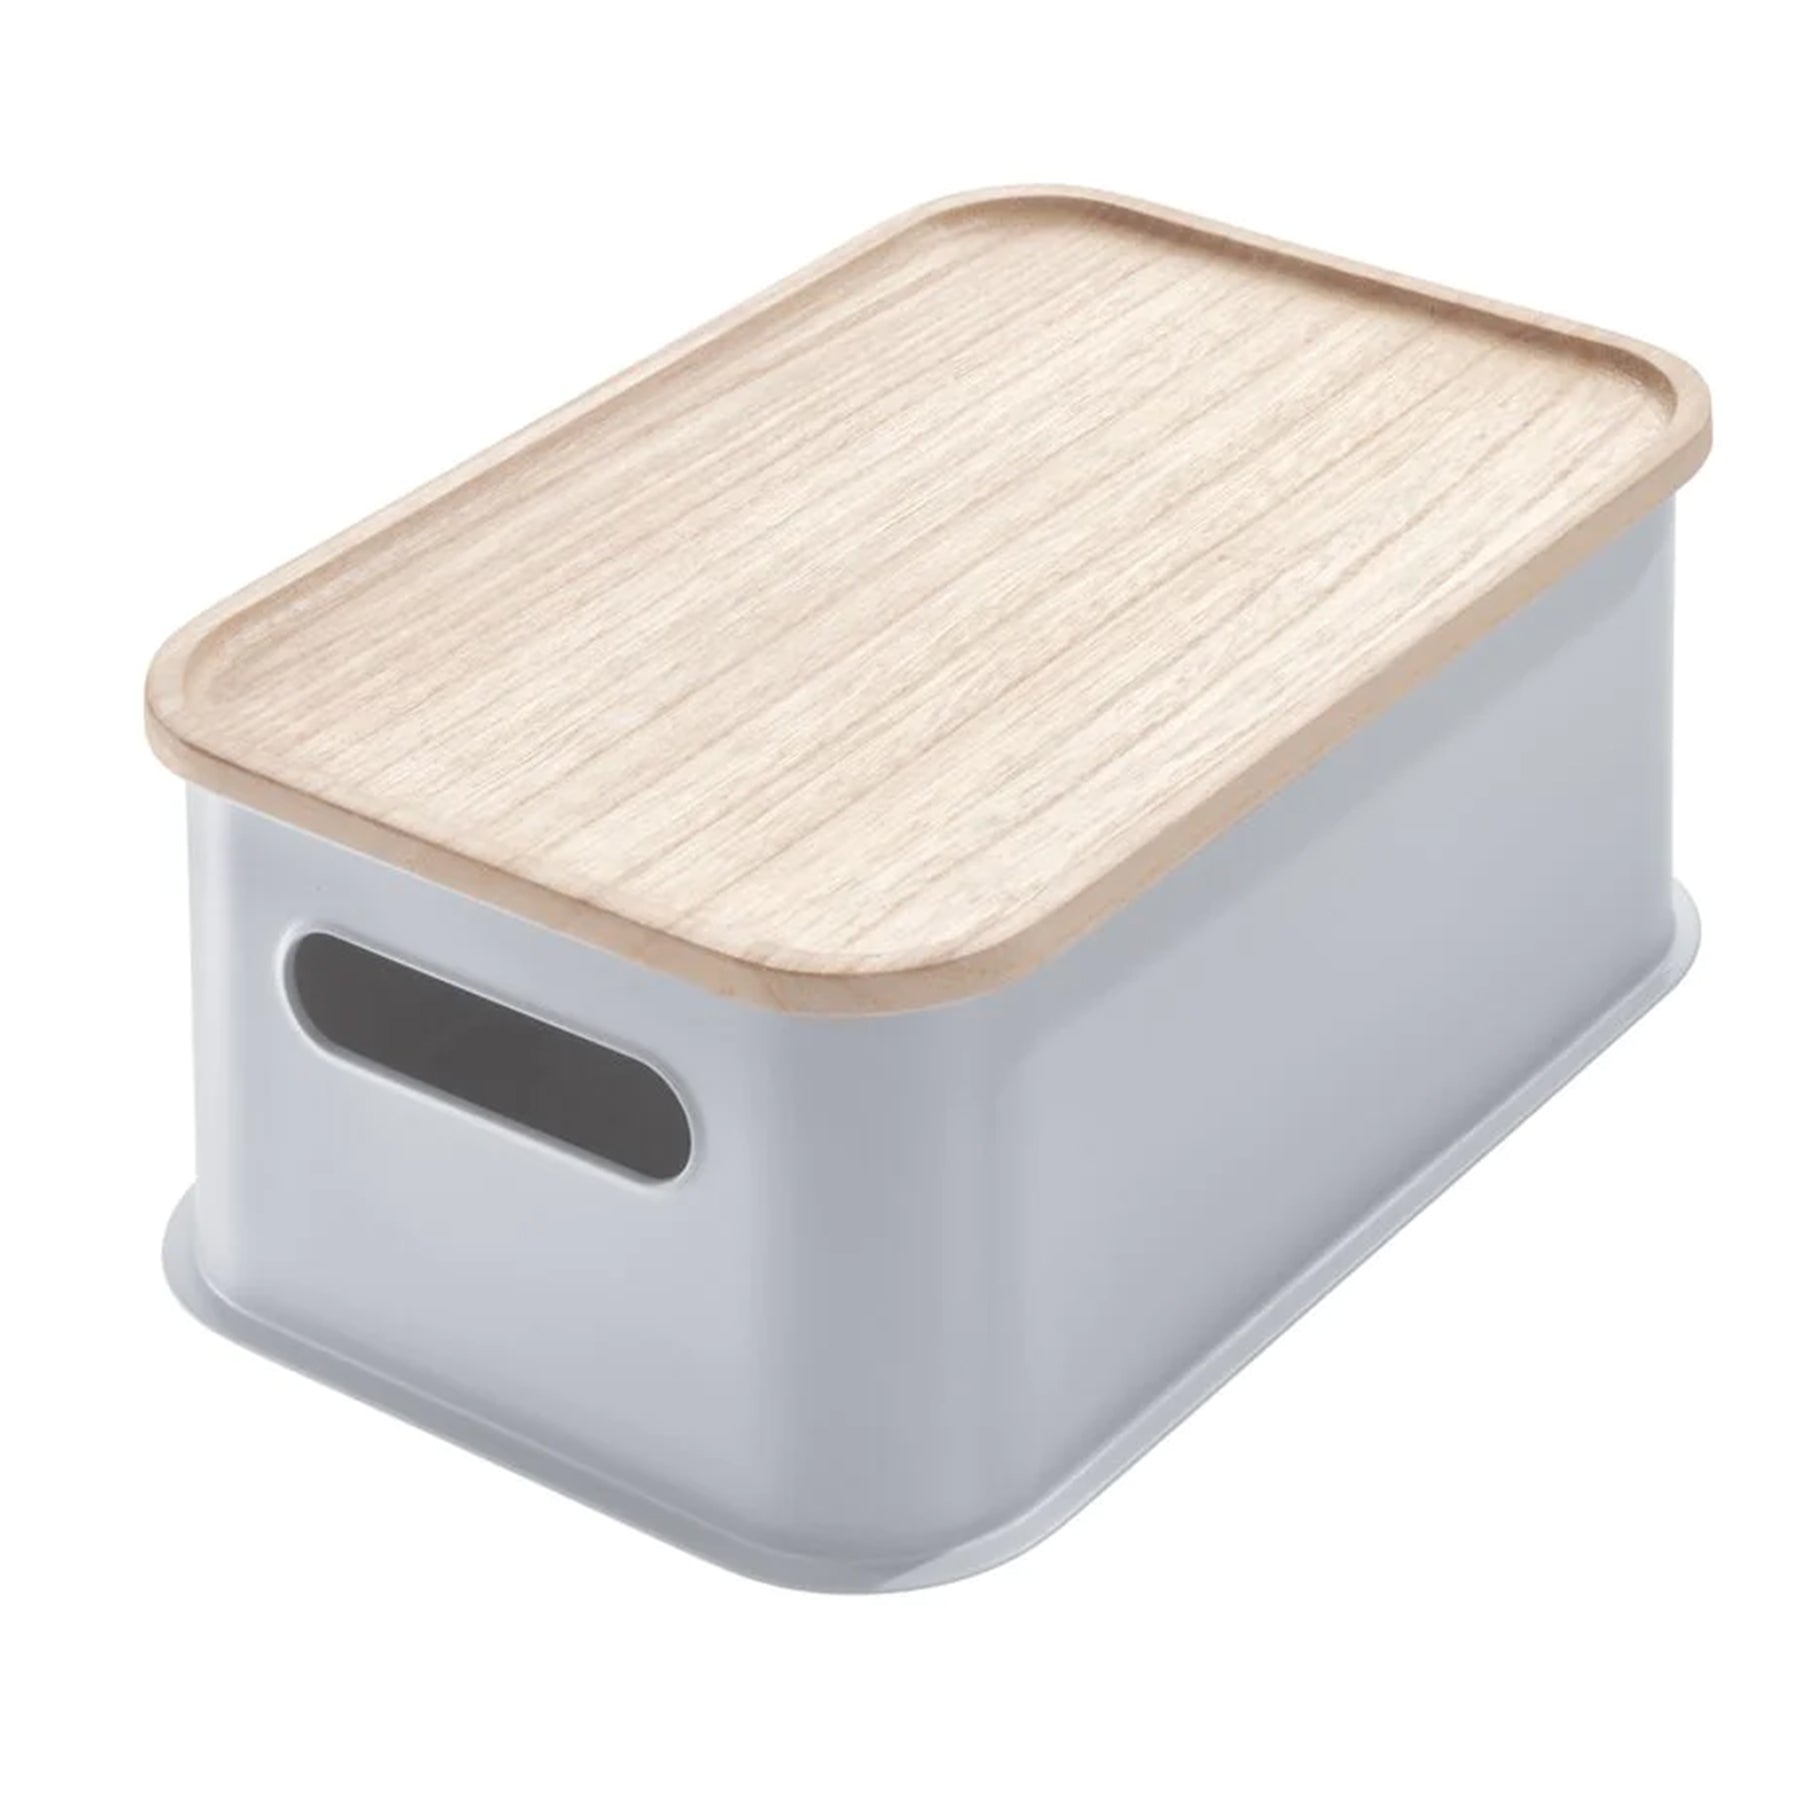 Plastic Medium Storage Bin with Handles & Wood Lid, Grey